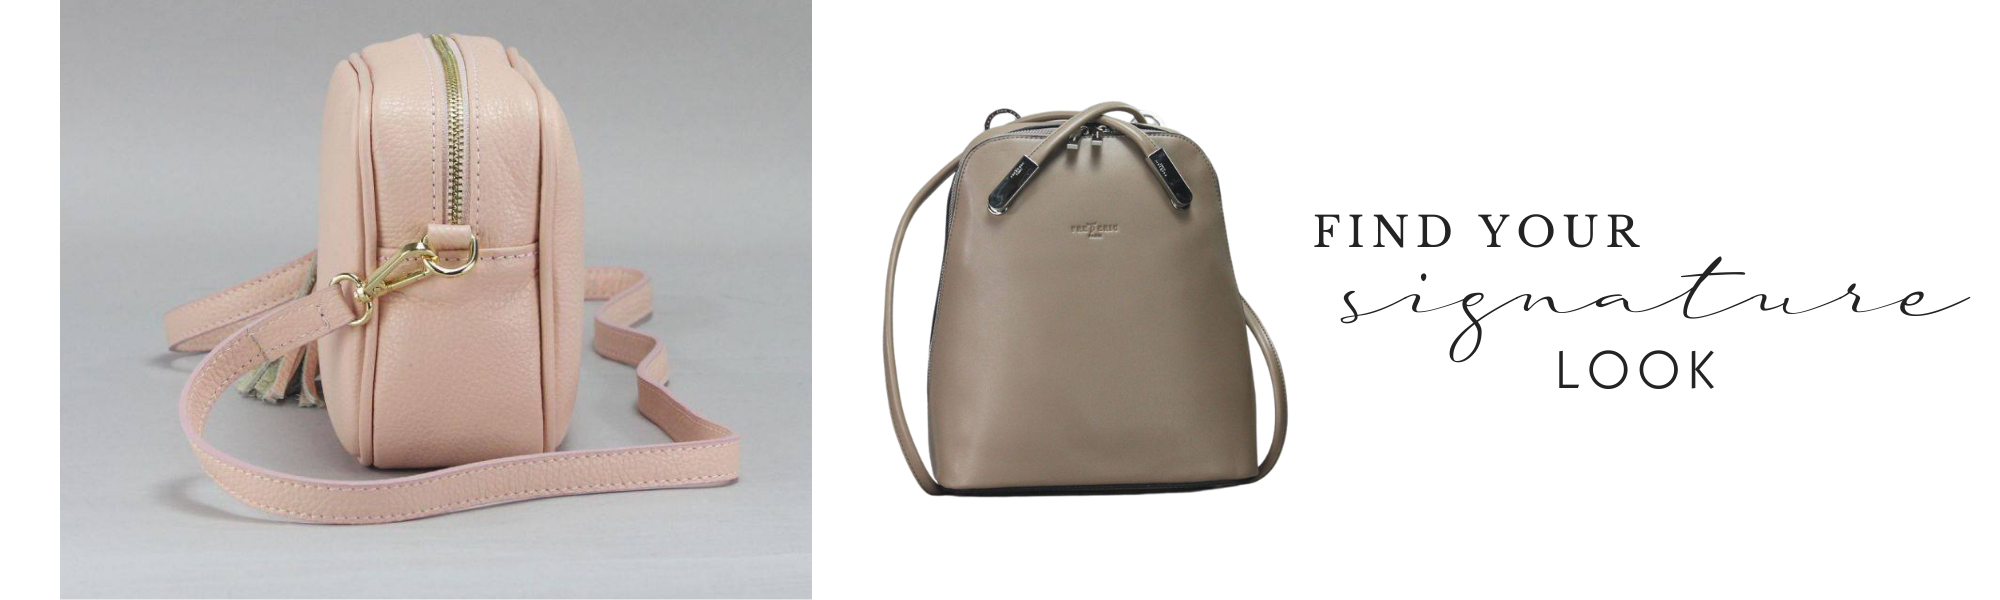 a light pink and a tan purse 